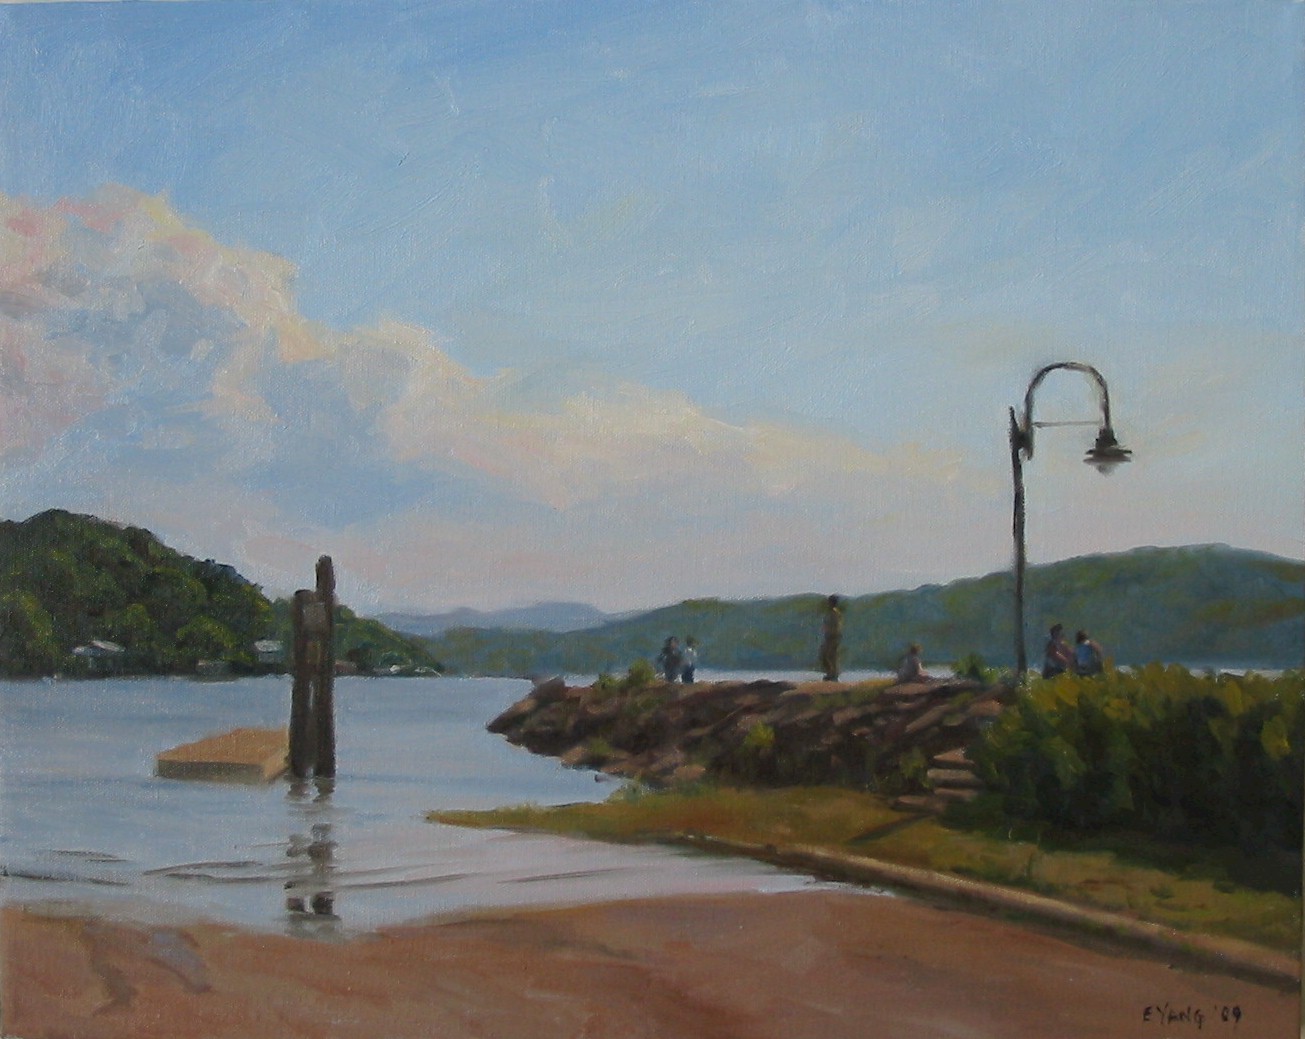 Peekskill Landing, 16"x20" oil on canvas